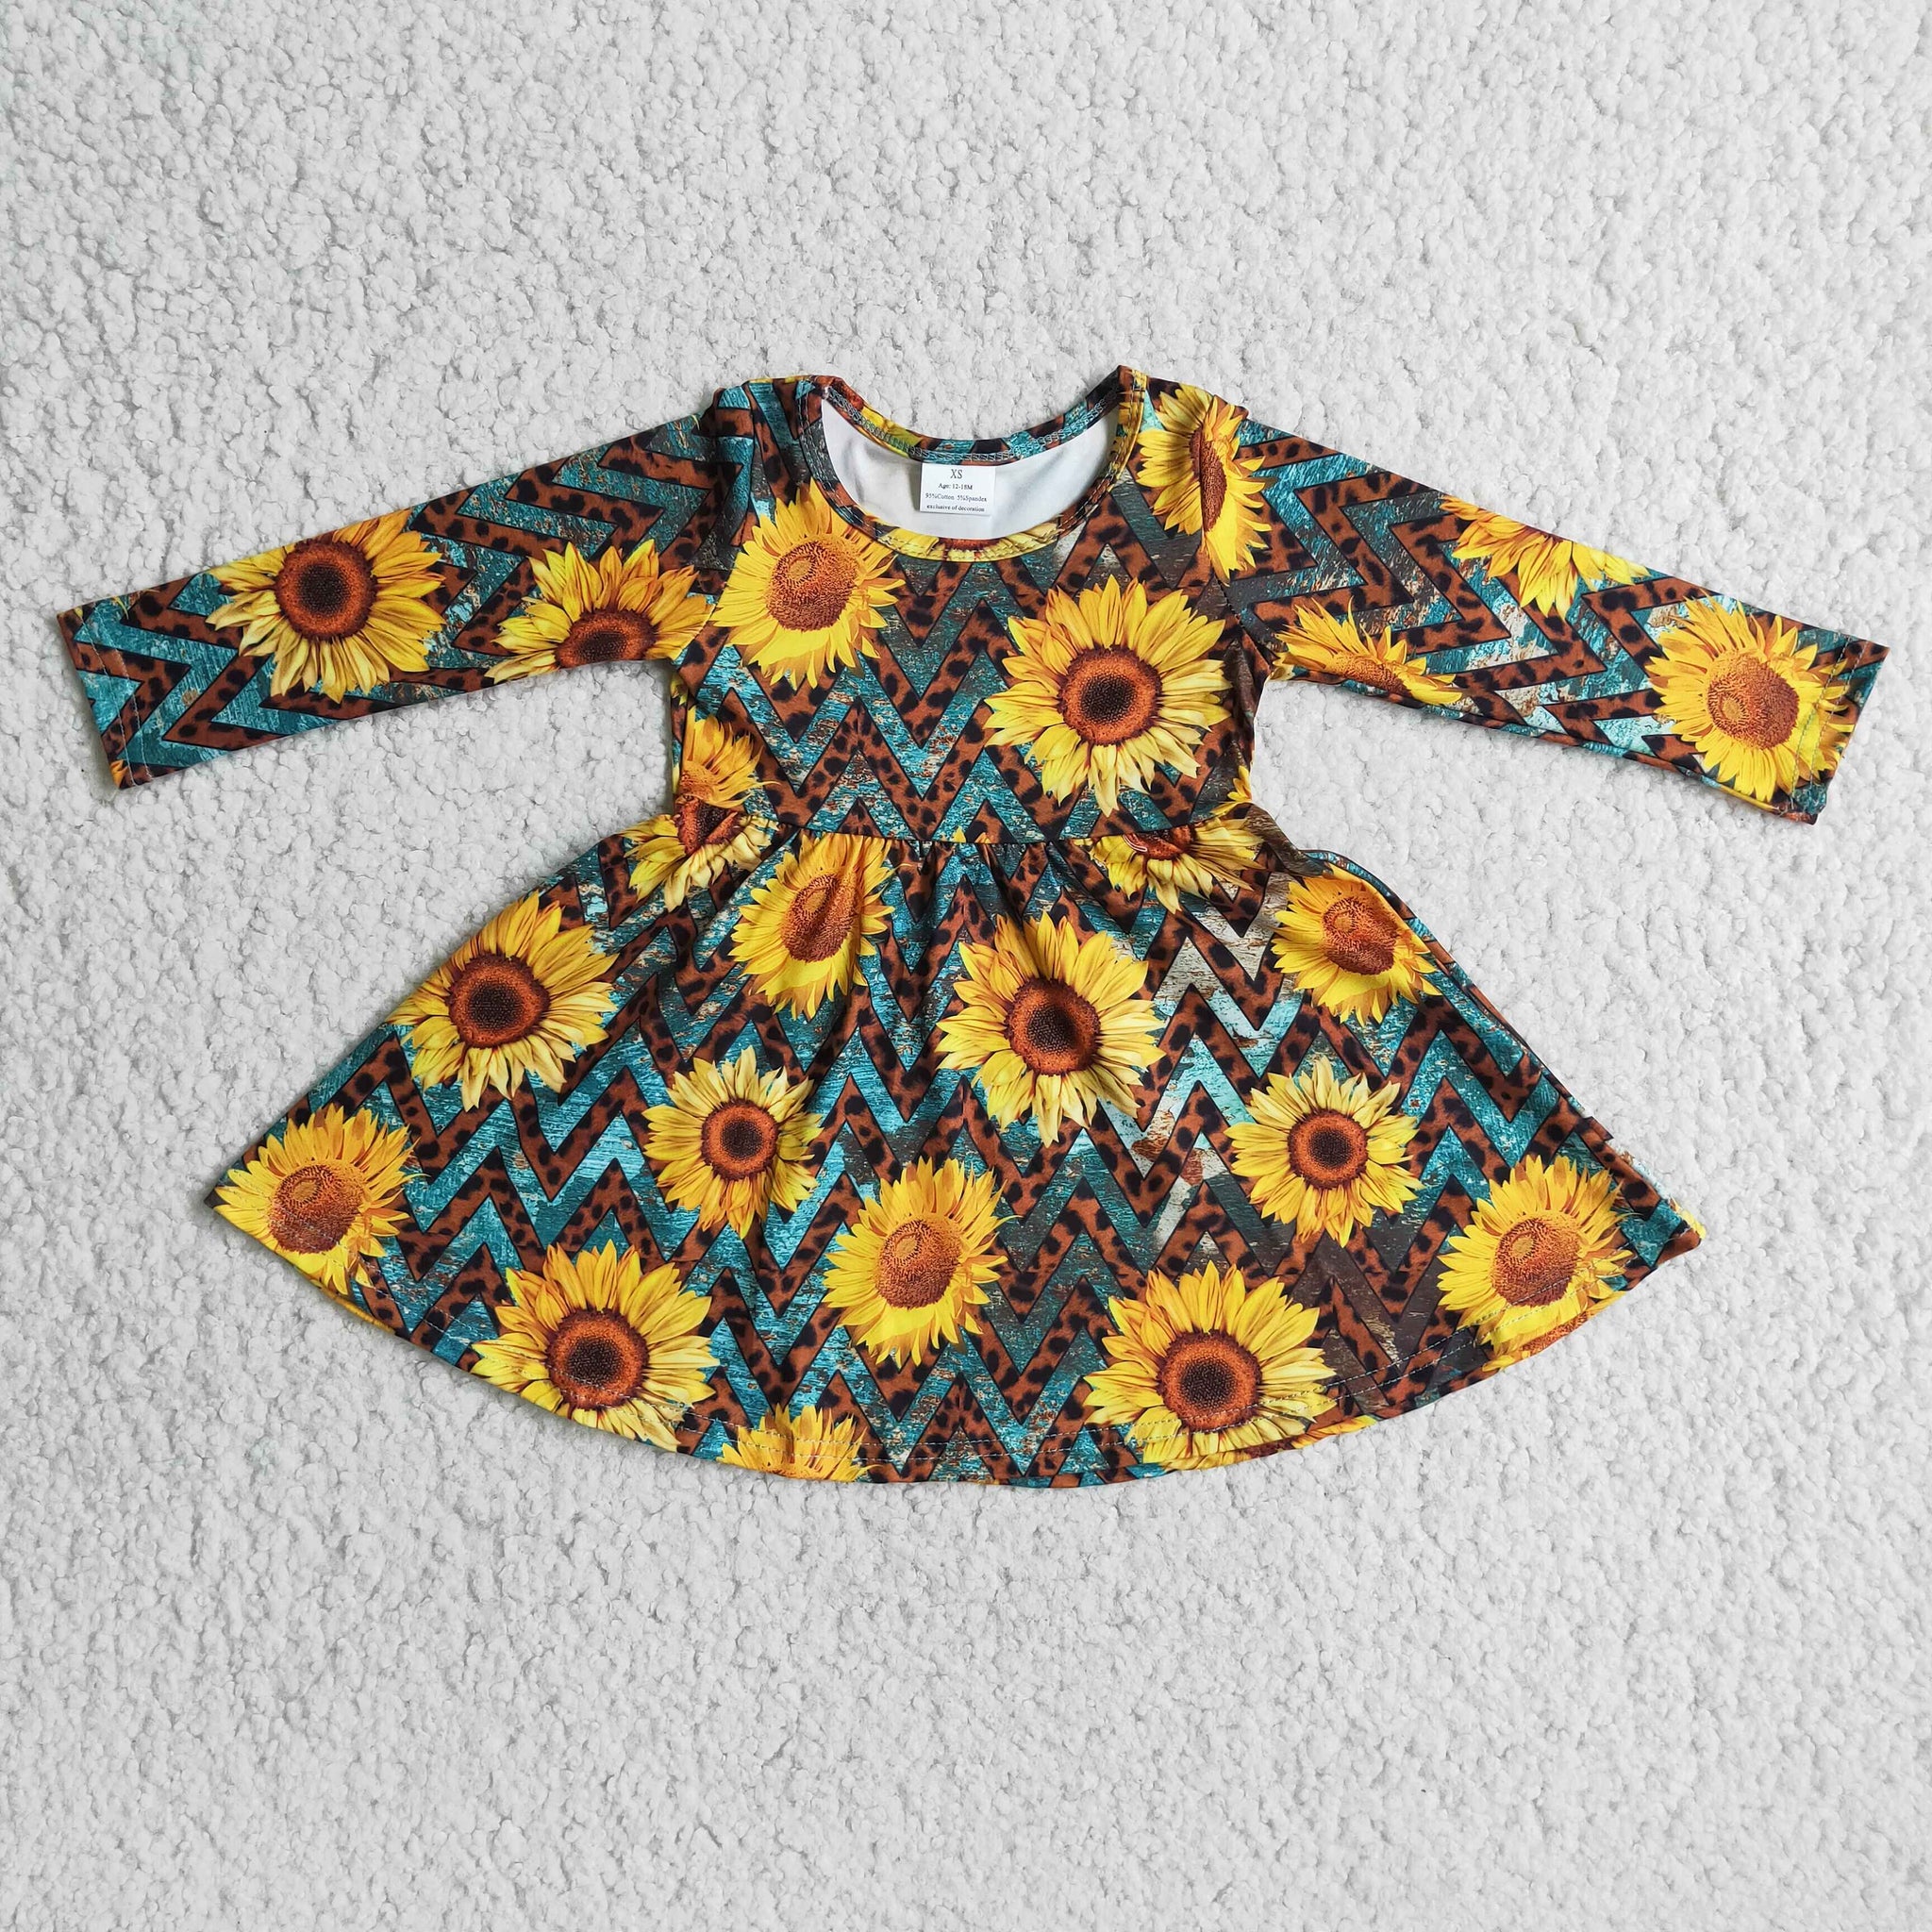 6 B3-22 baby girl clothes sunflower winter dress girl dresses